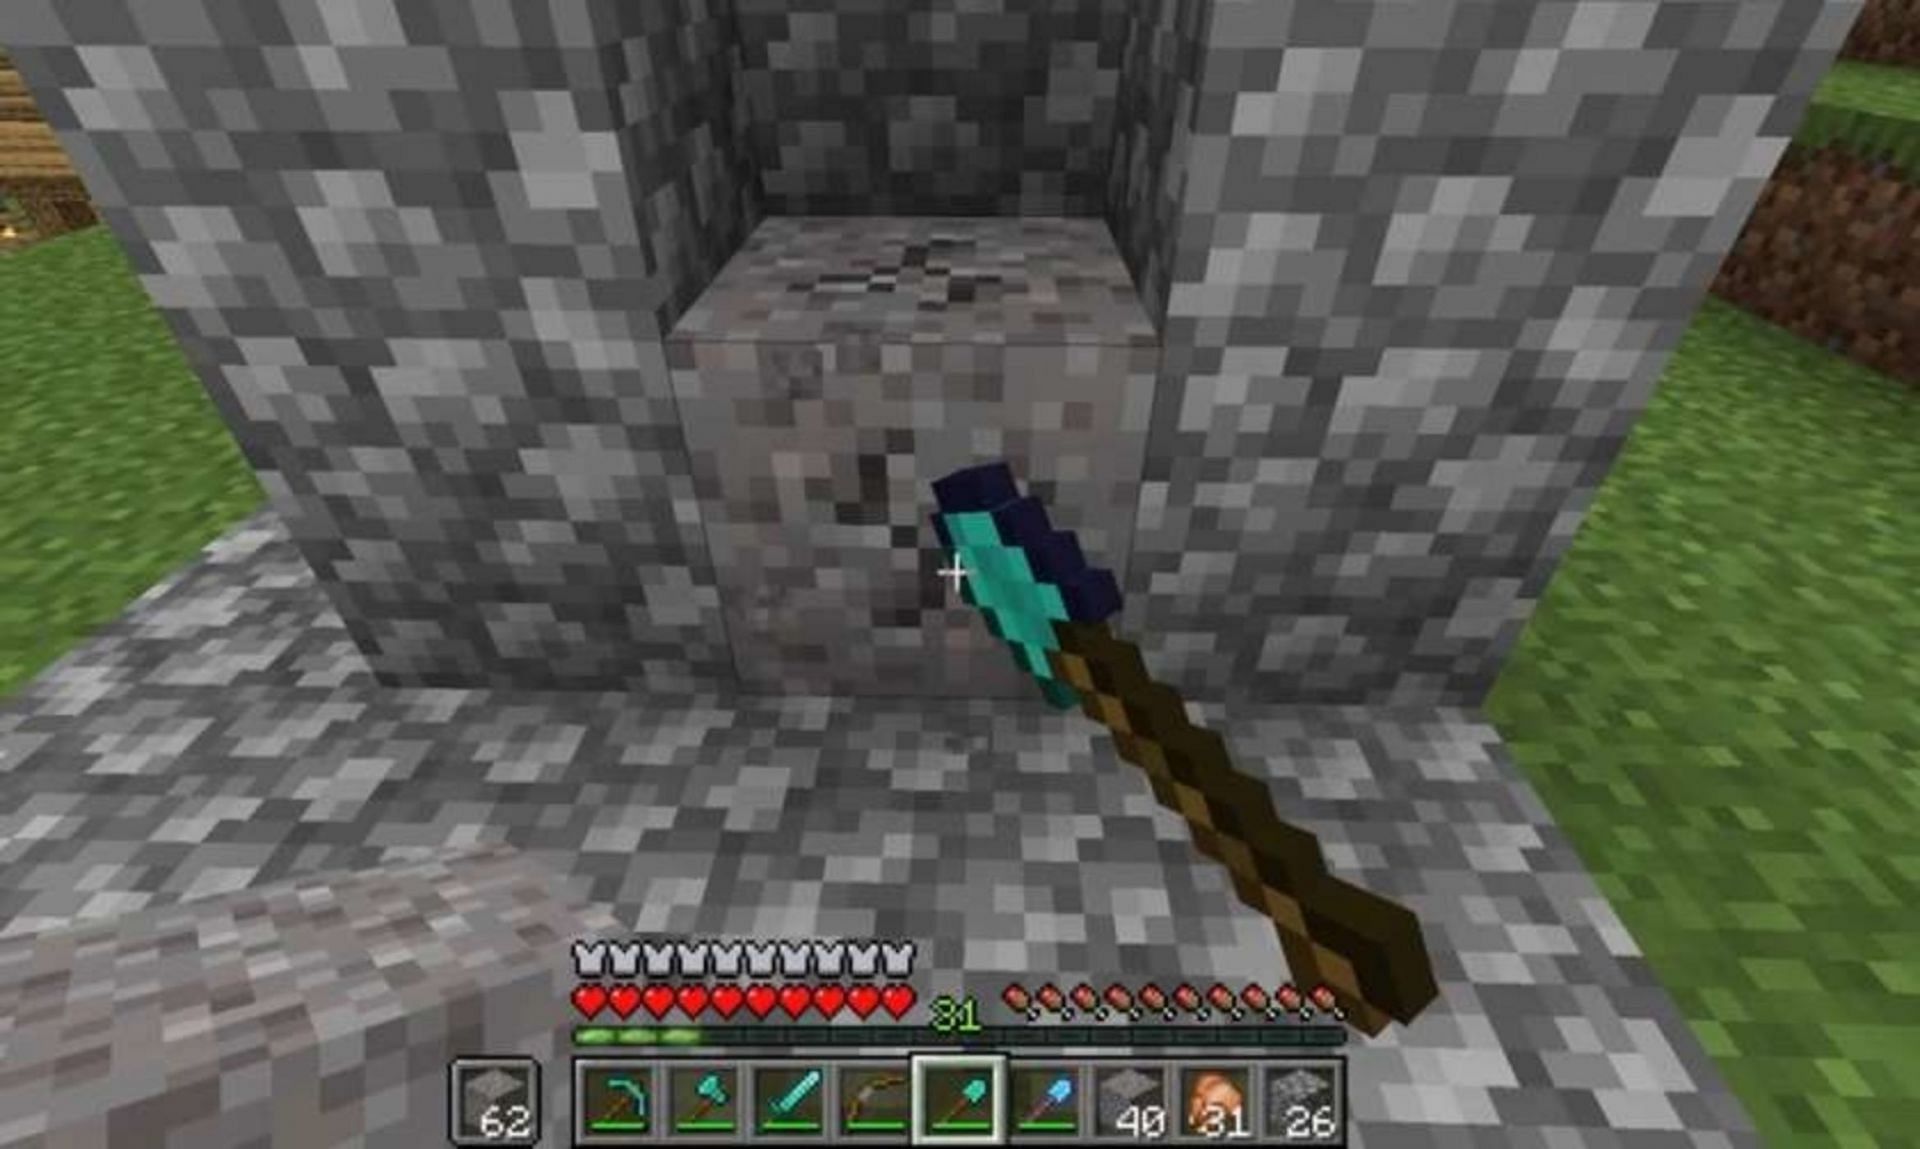 Players can obtain flint from mining gravel blocks in Minecraft (Image via Mojang)